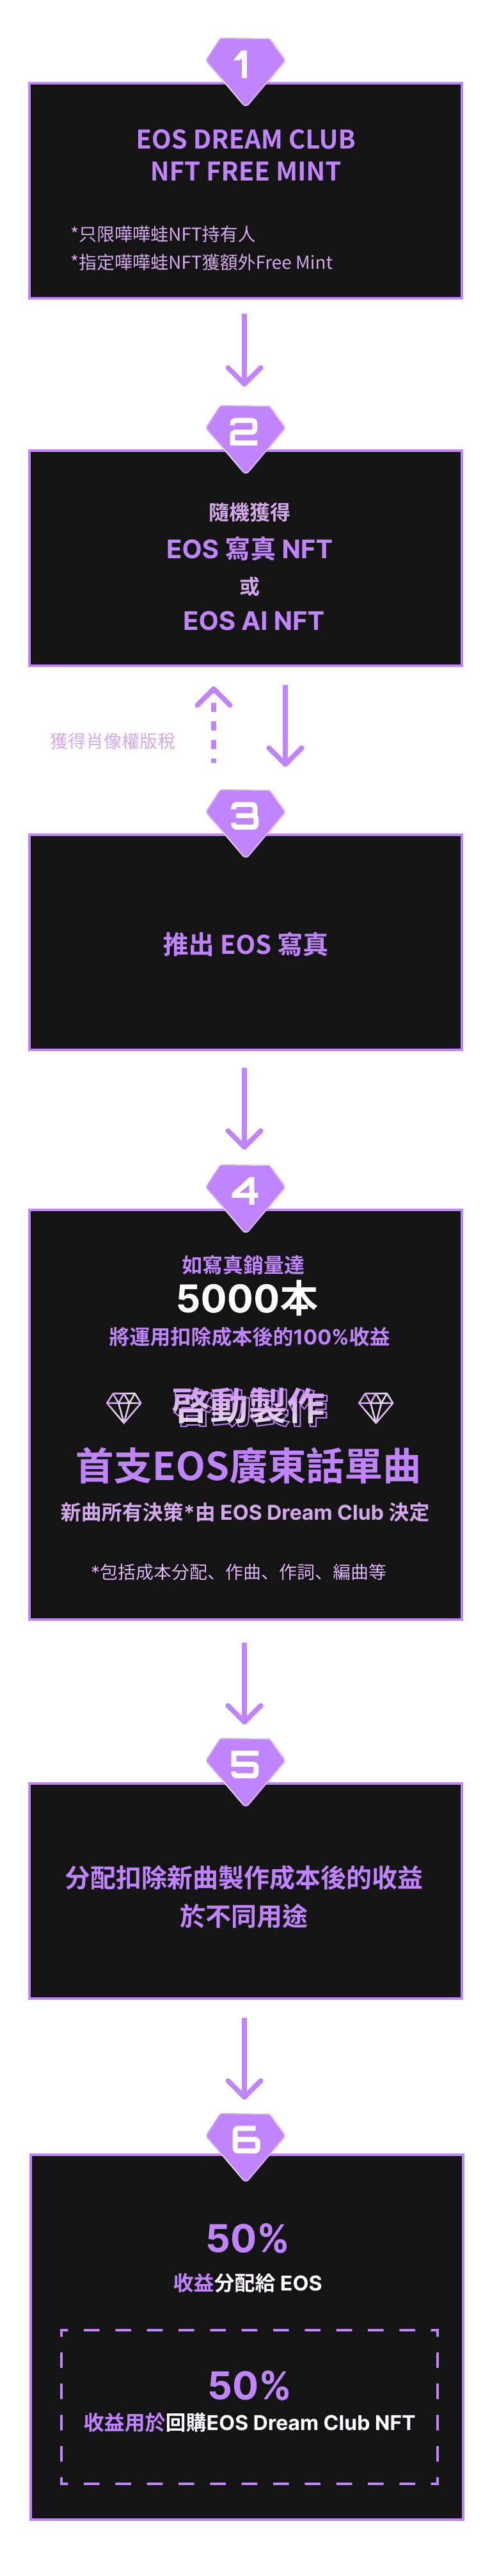 EOS Dream Club Plan